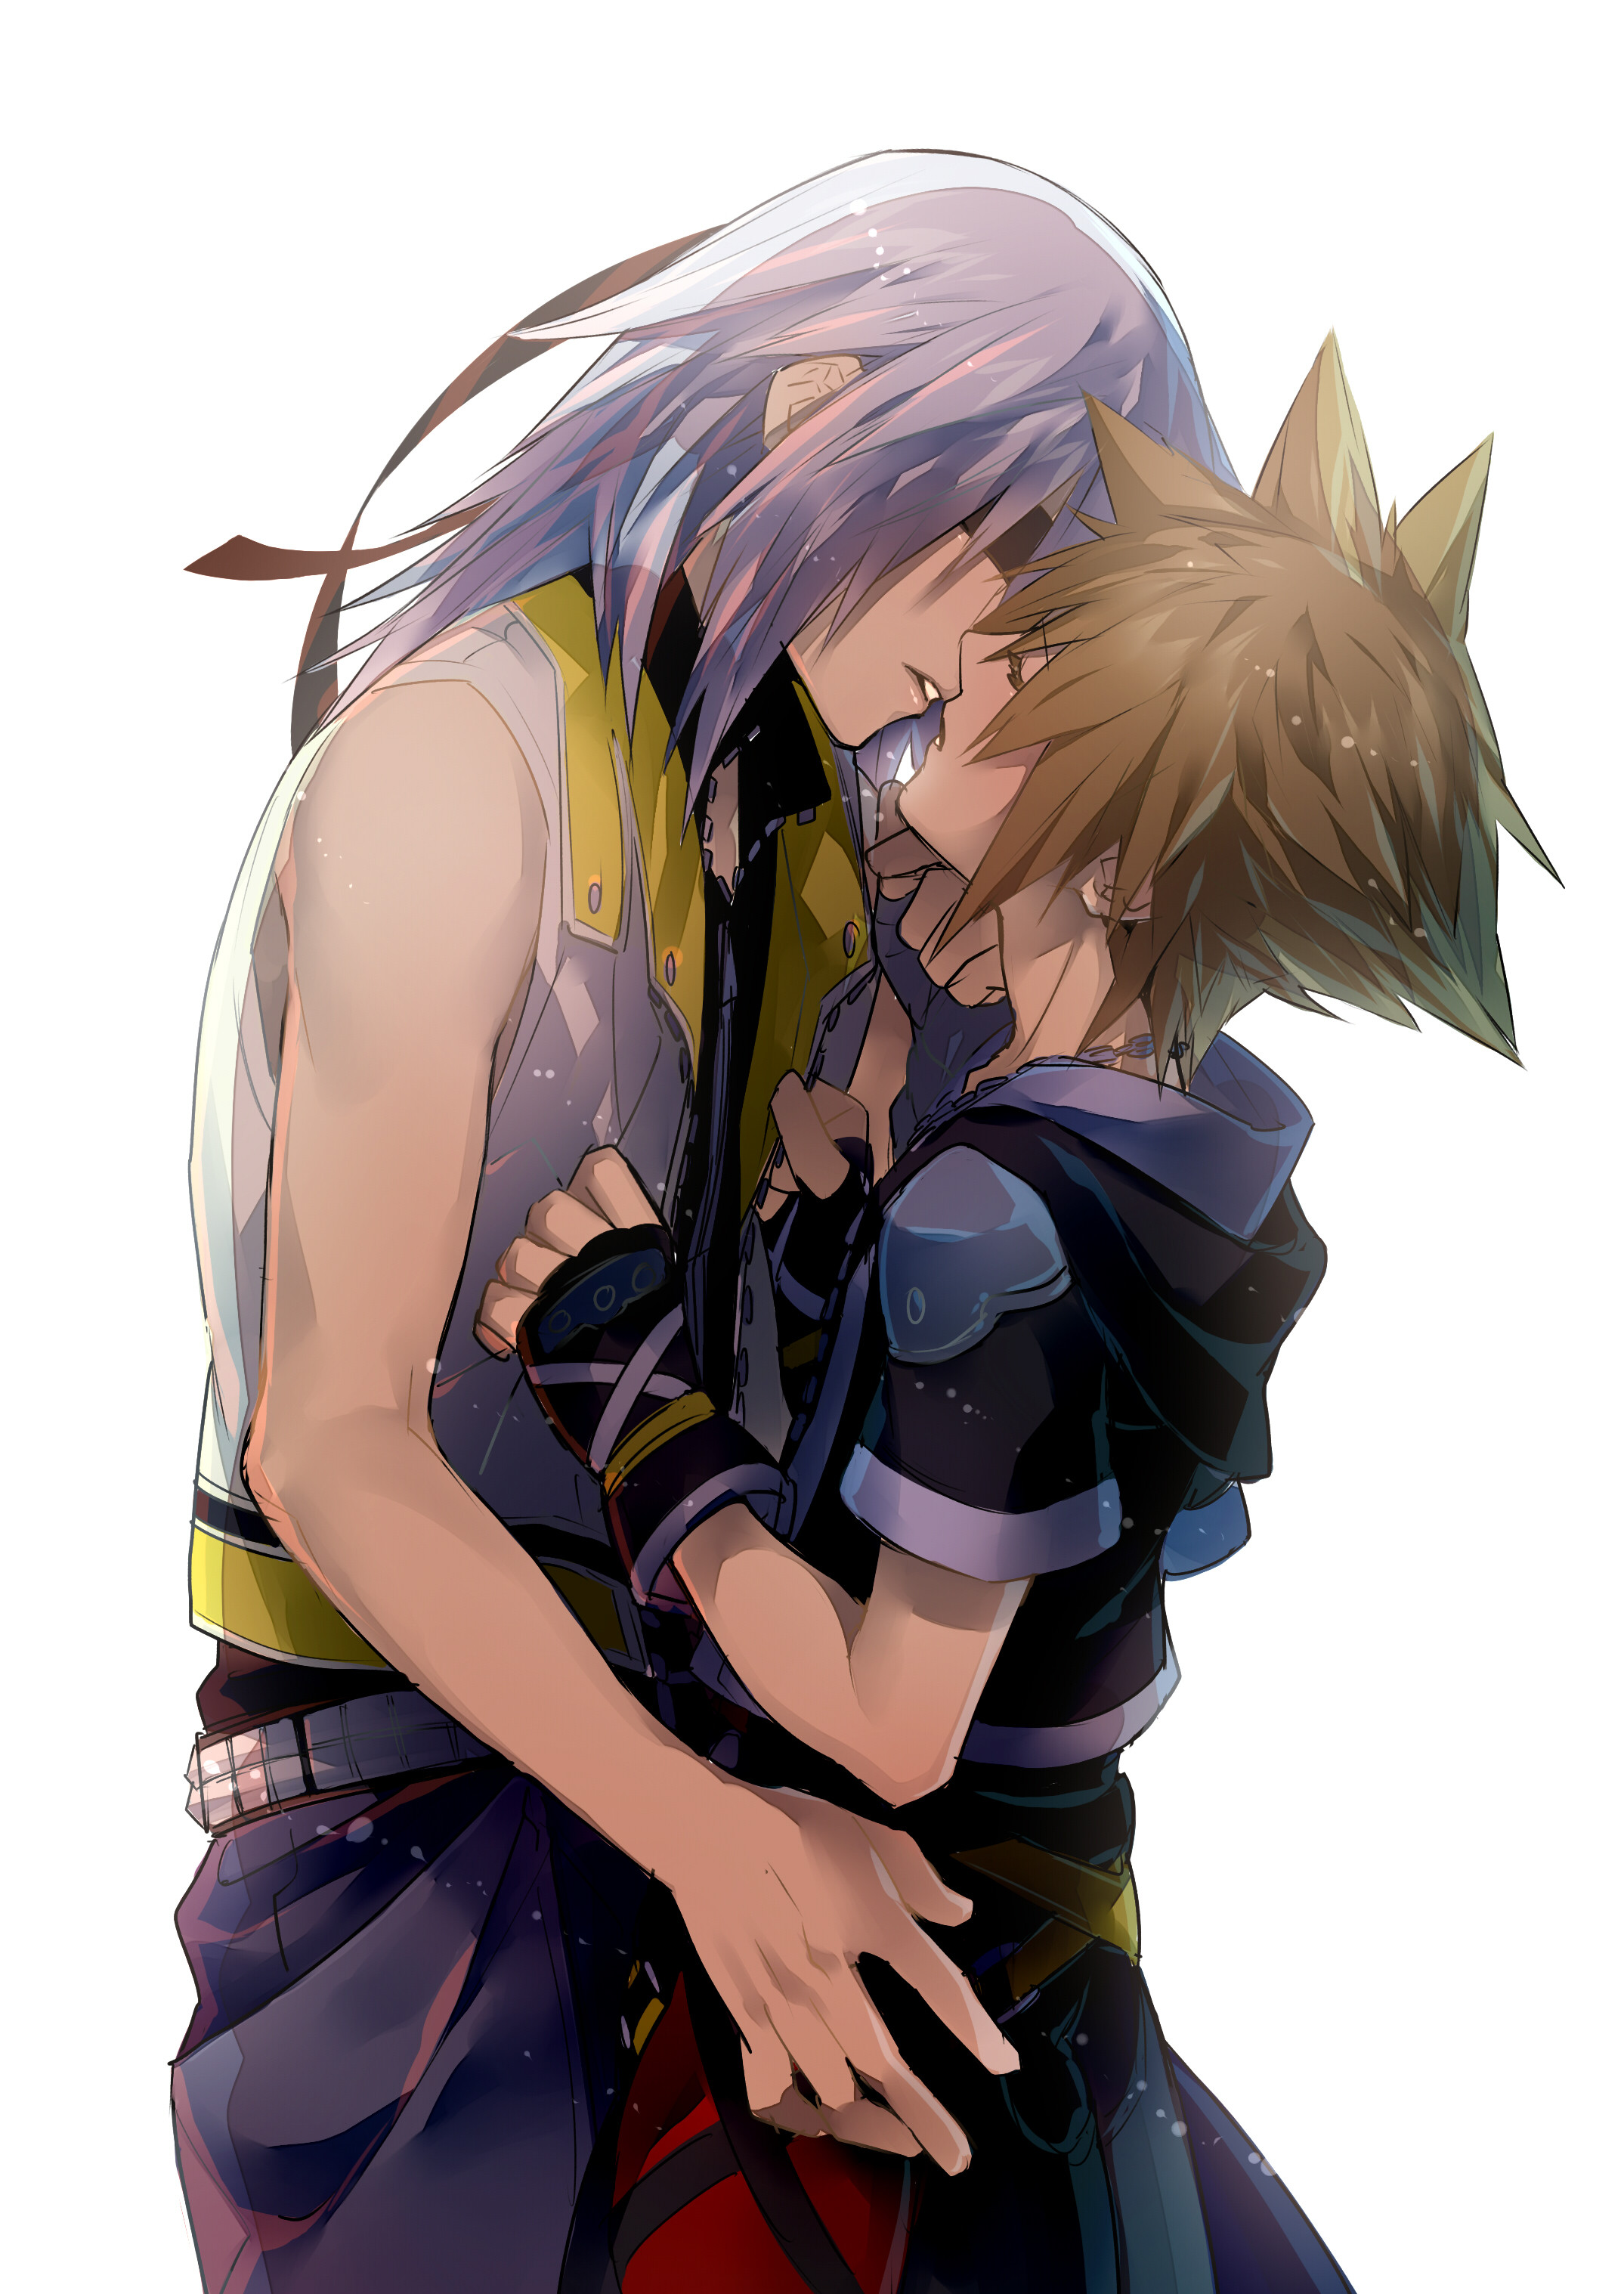 Kingdom Hearts Riku Wallpaper 70 Images